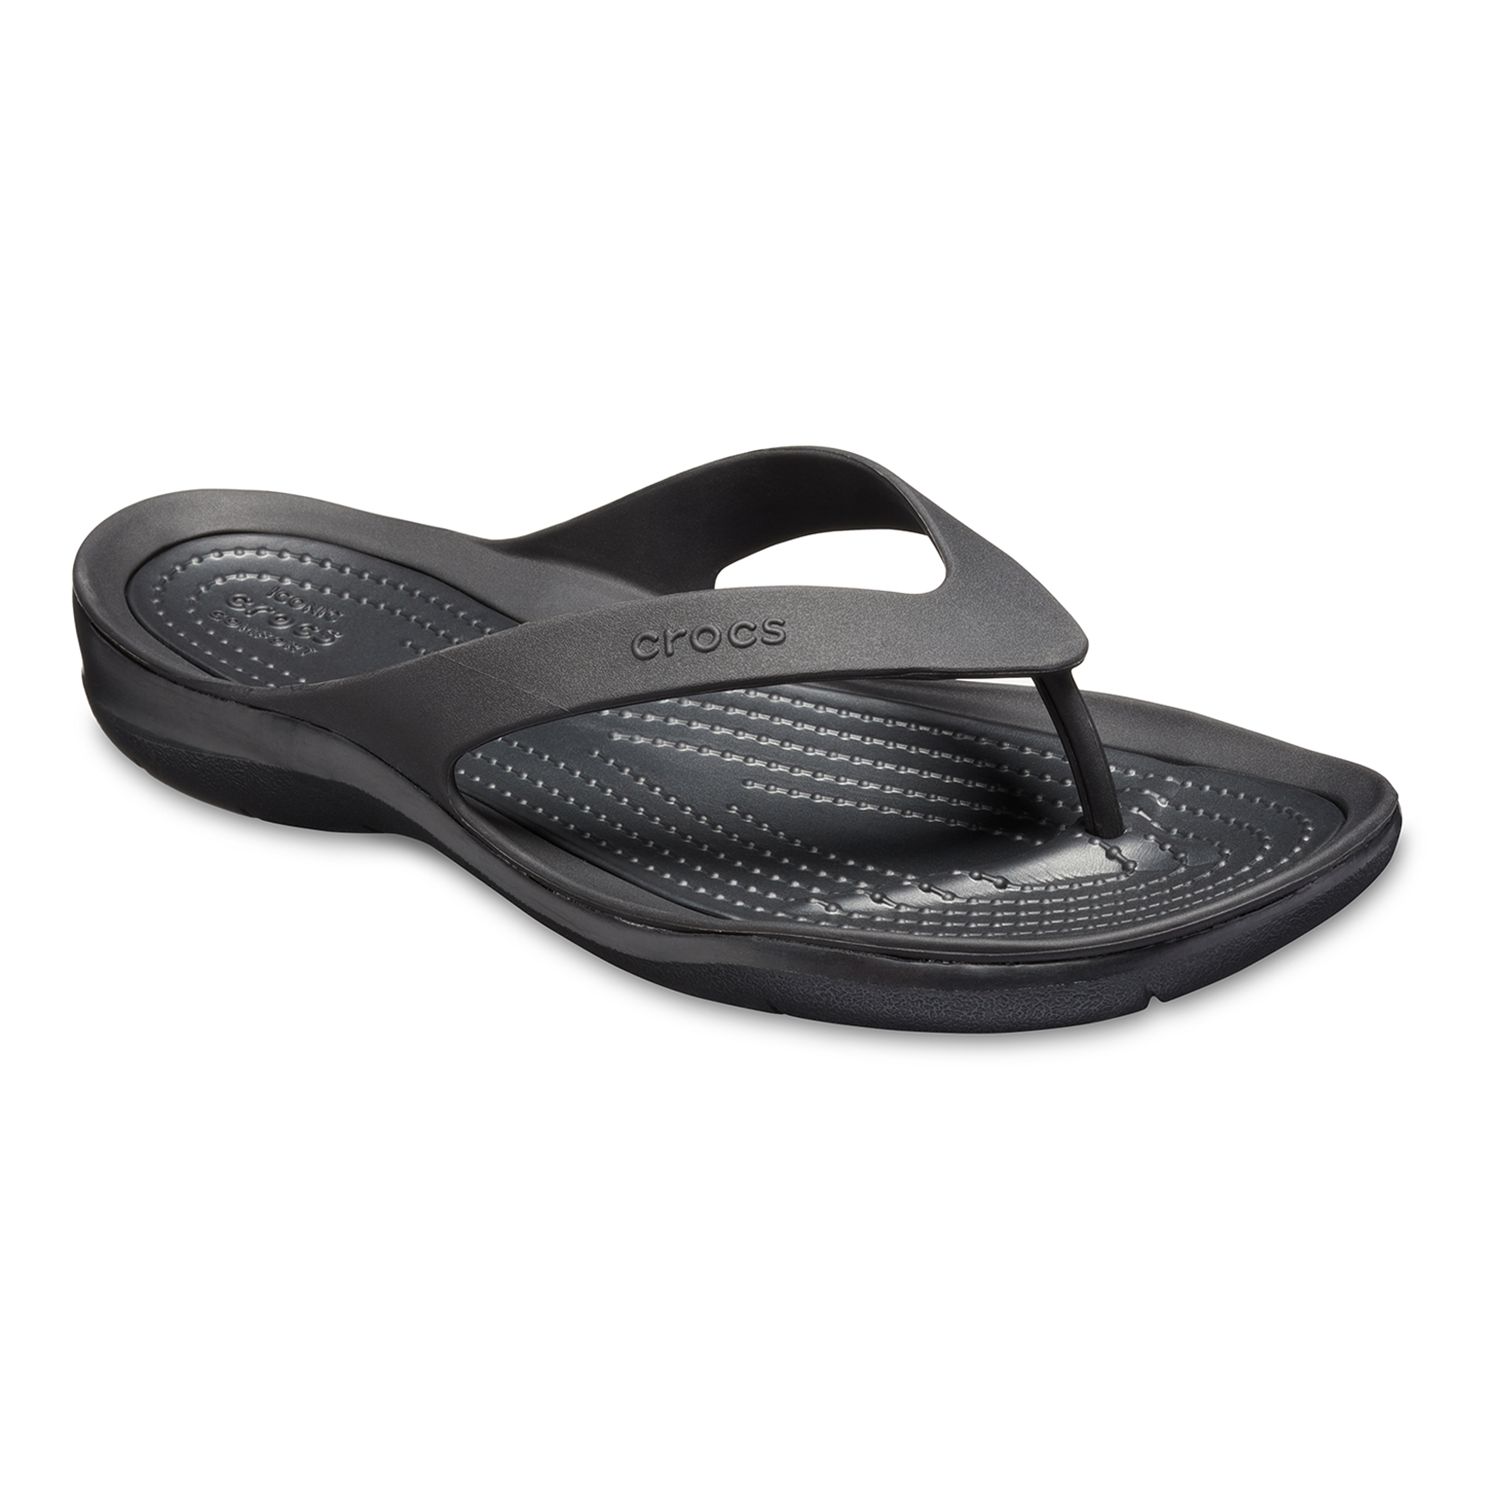 Crocs Swiftwater Women's Flip Flop Sandals